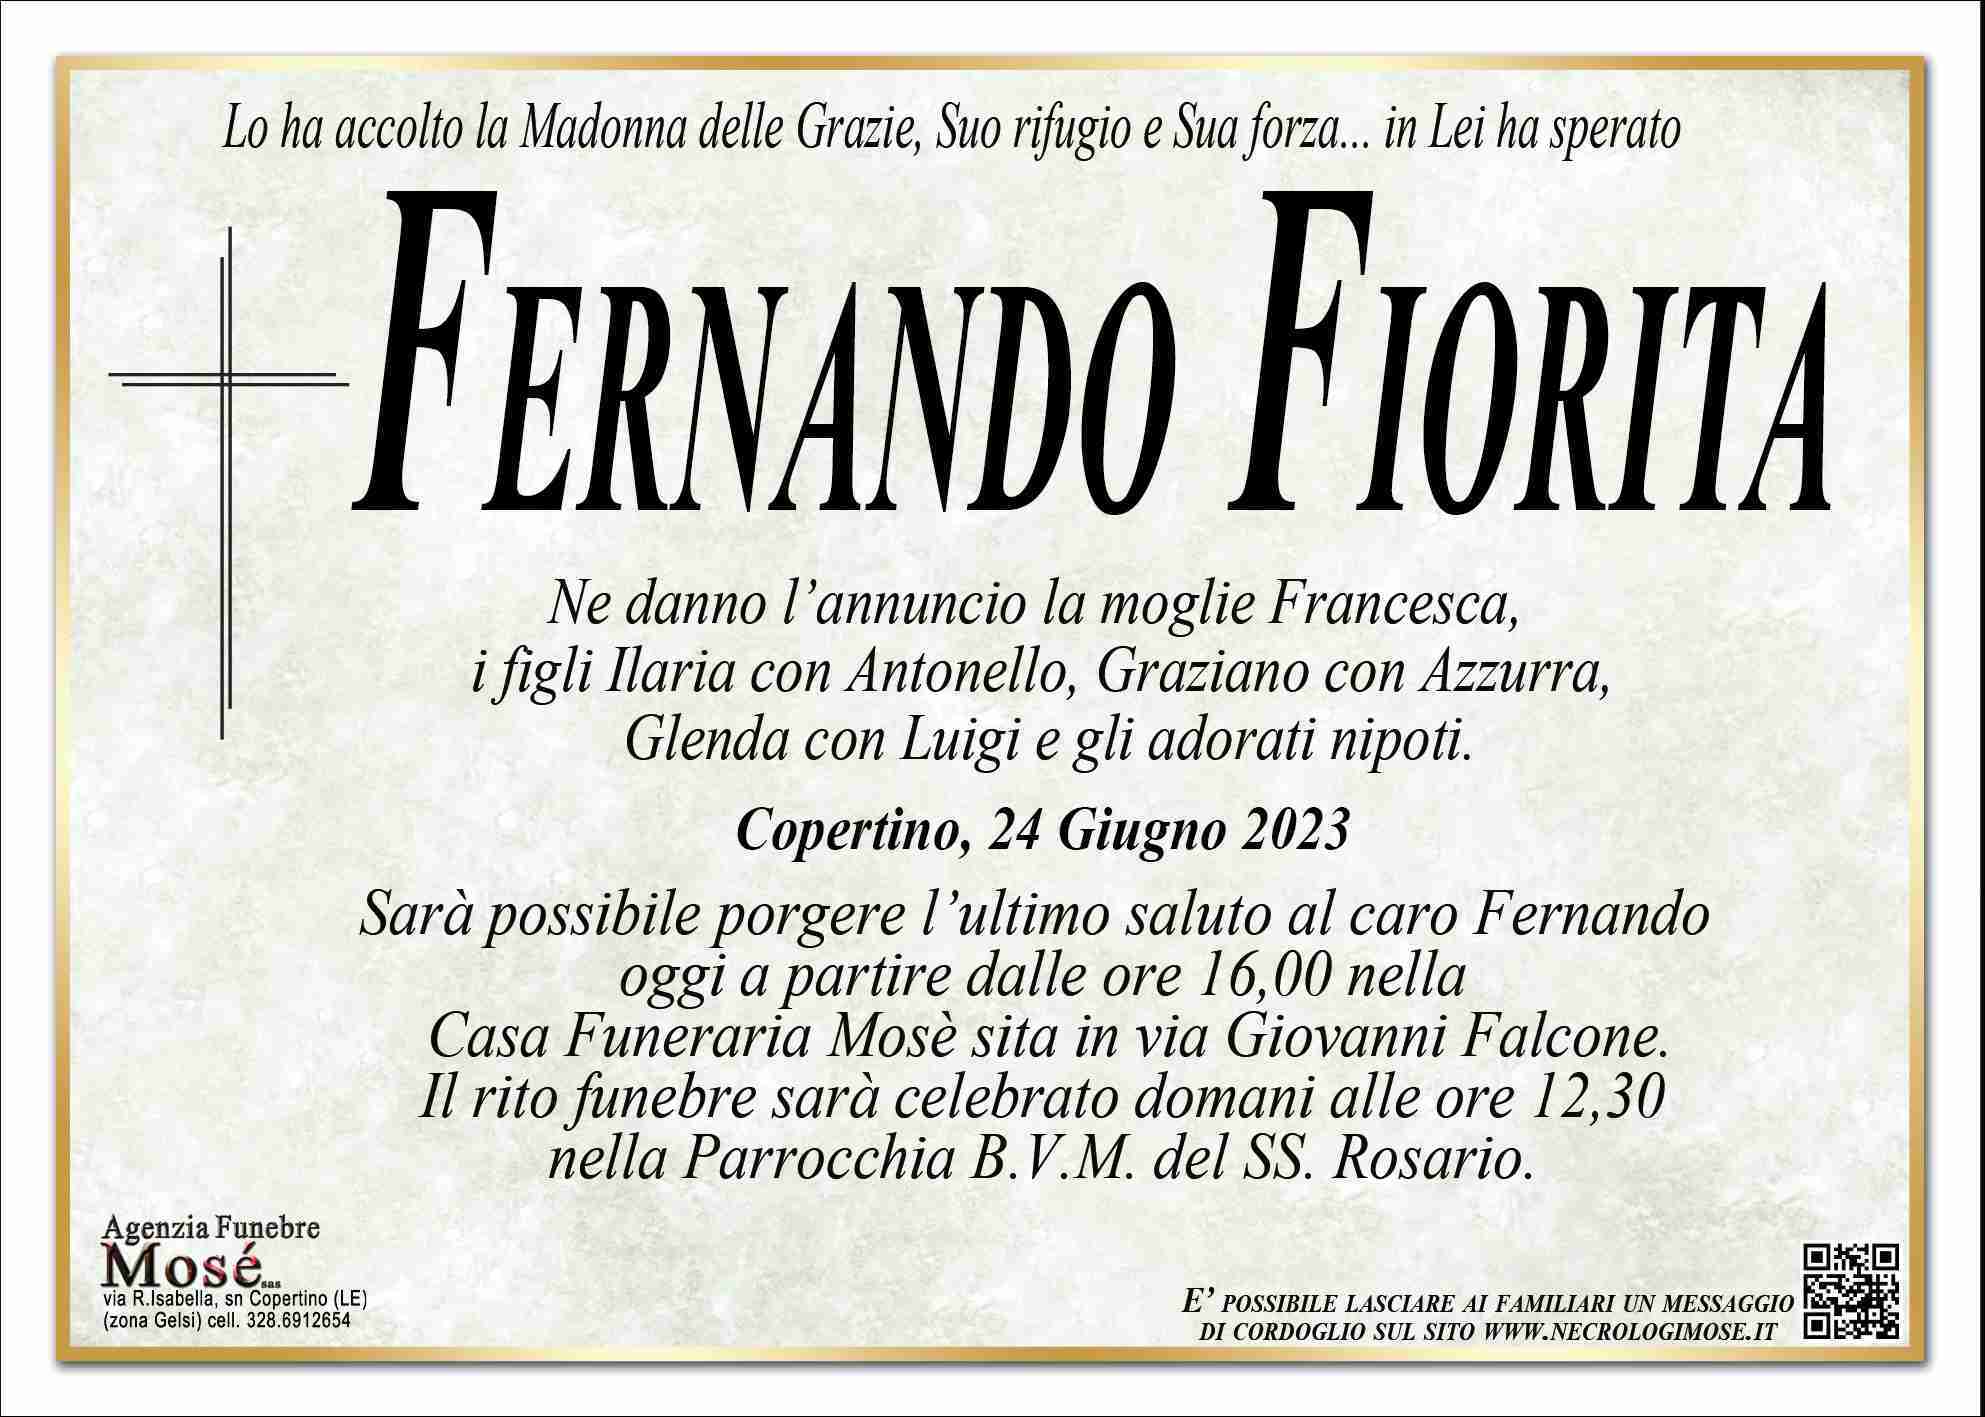 Fernando Fiorita